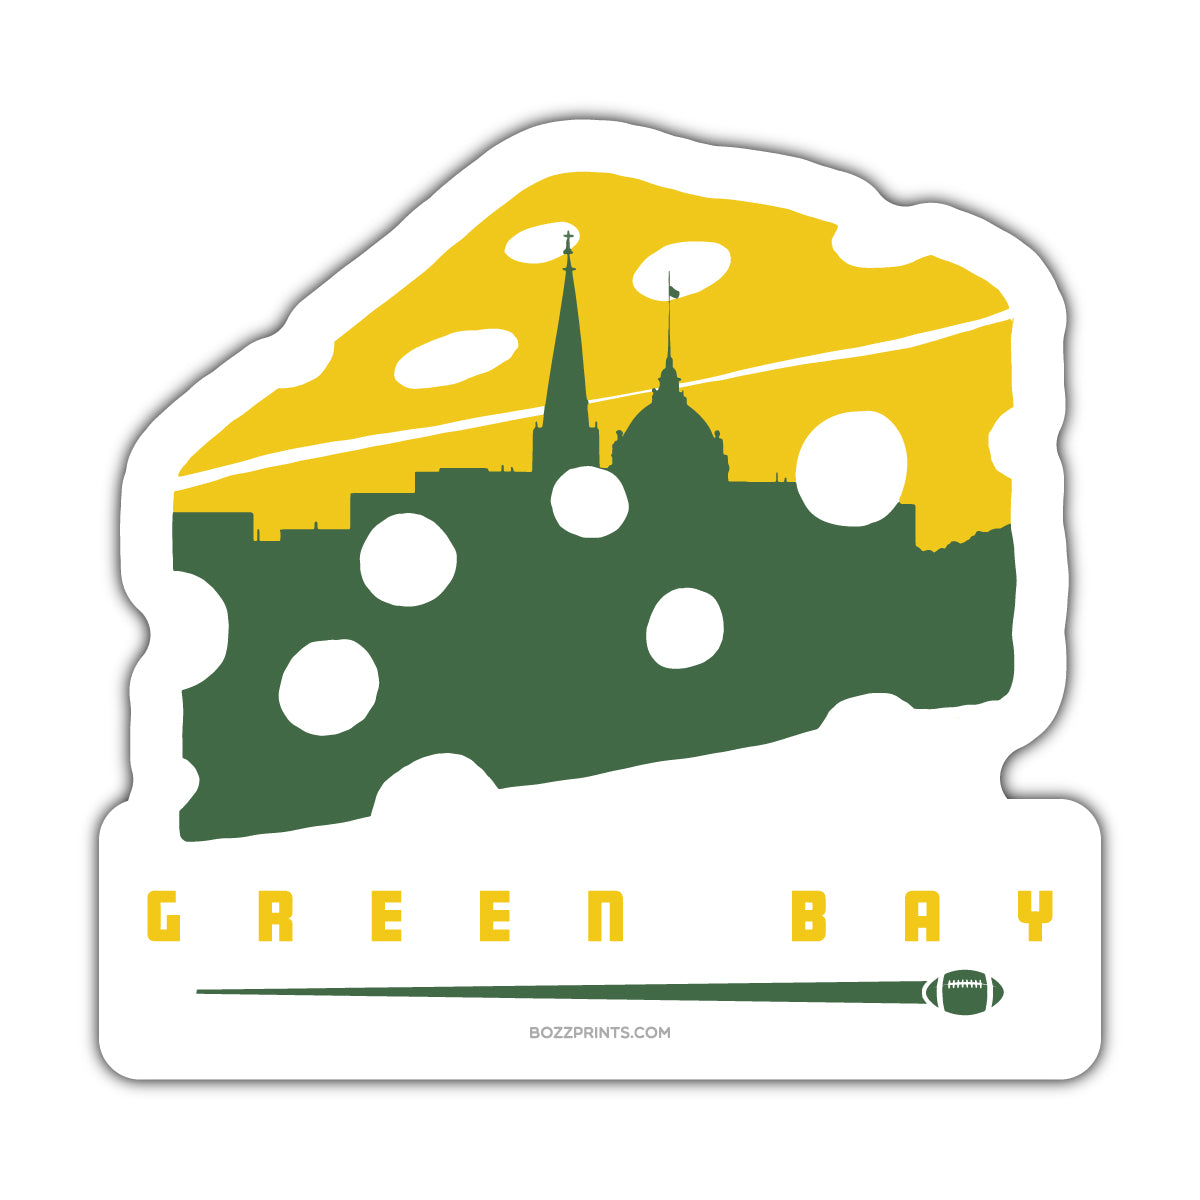 Green Bay Football - Bozz Prints